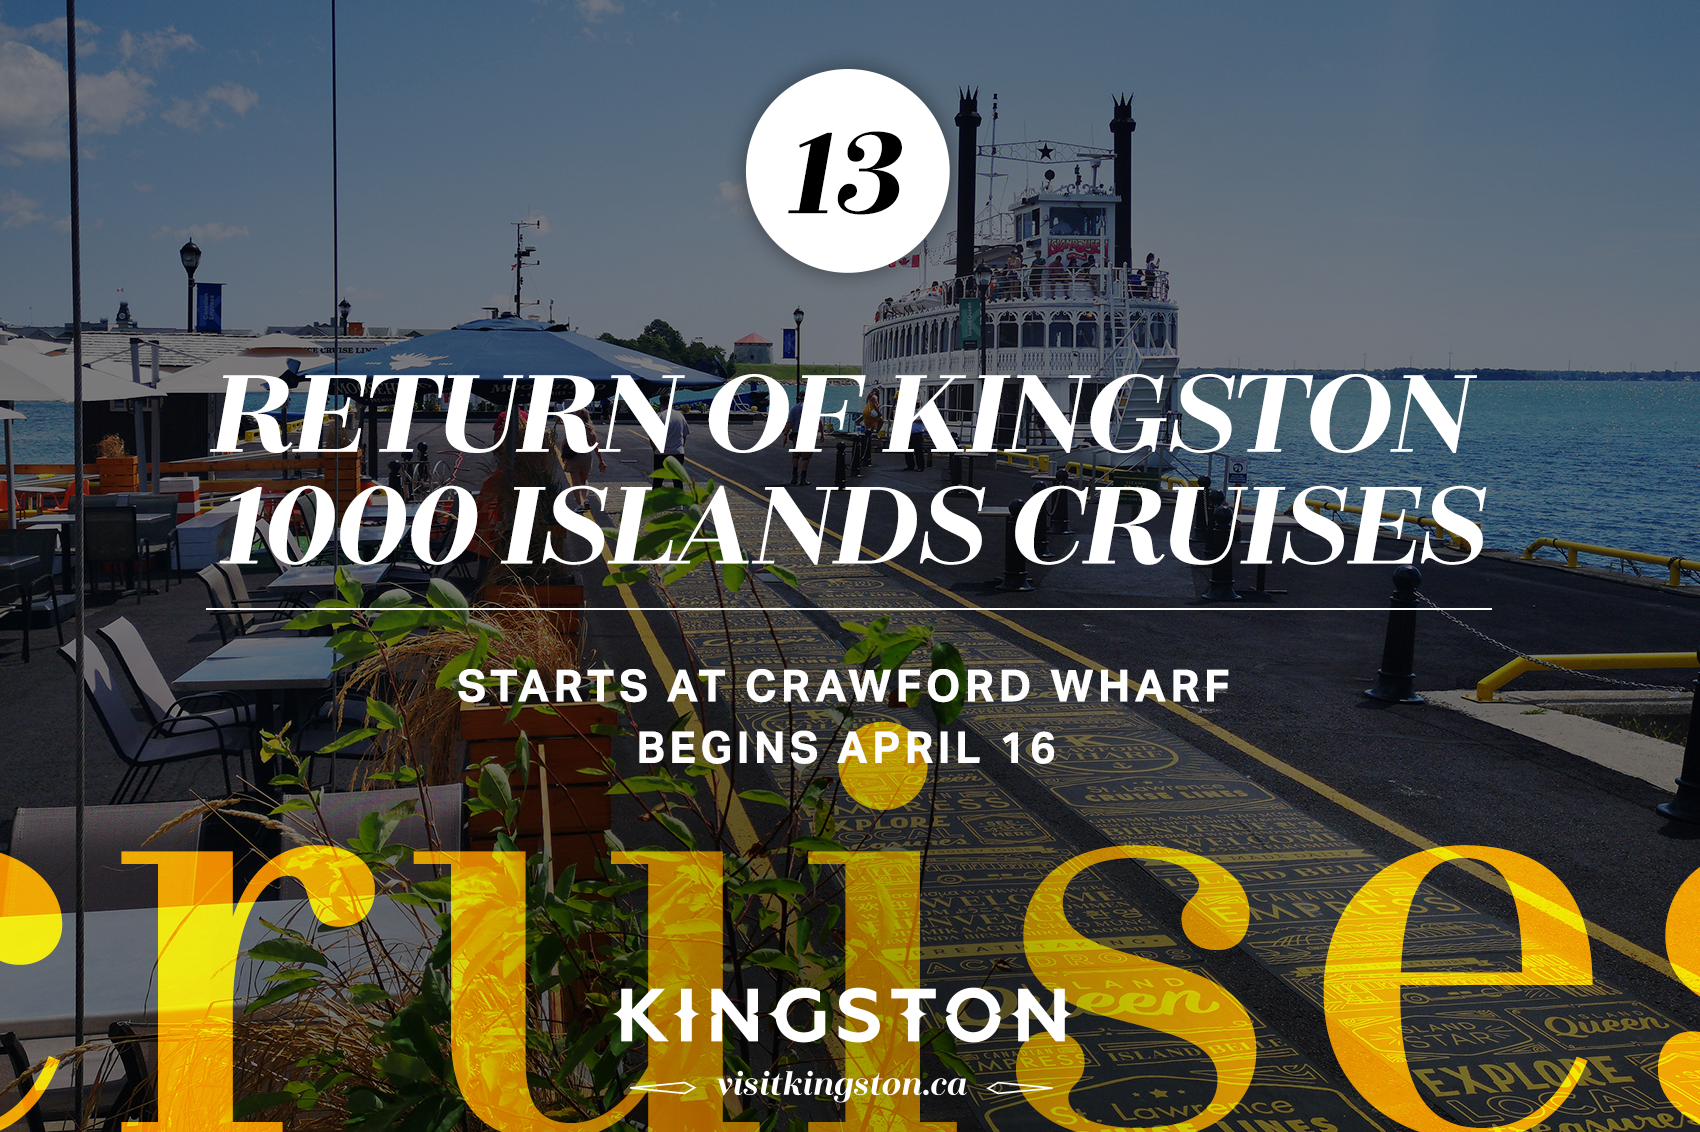 Return of Kingston 1000 Islands Cruises